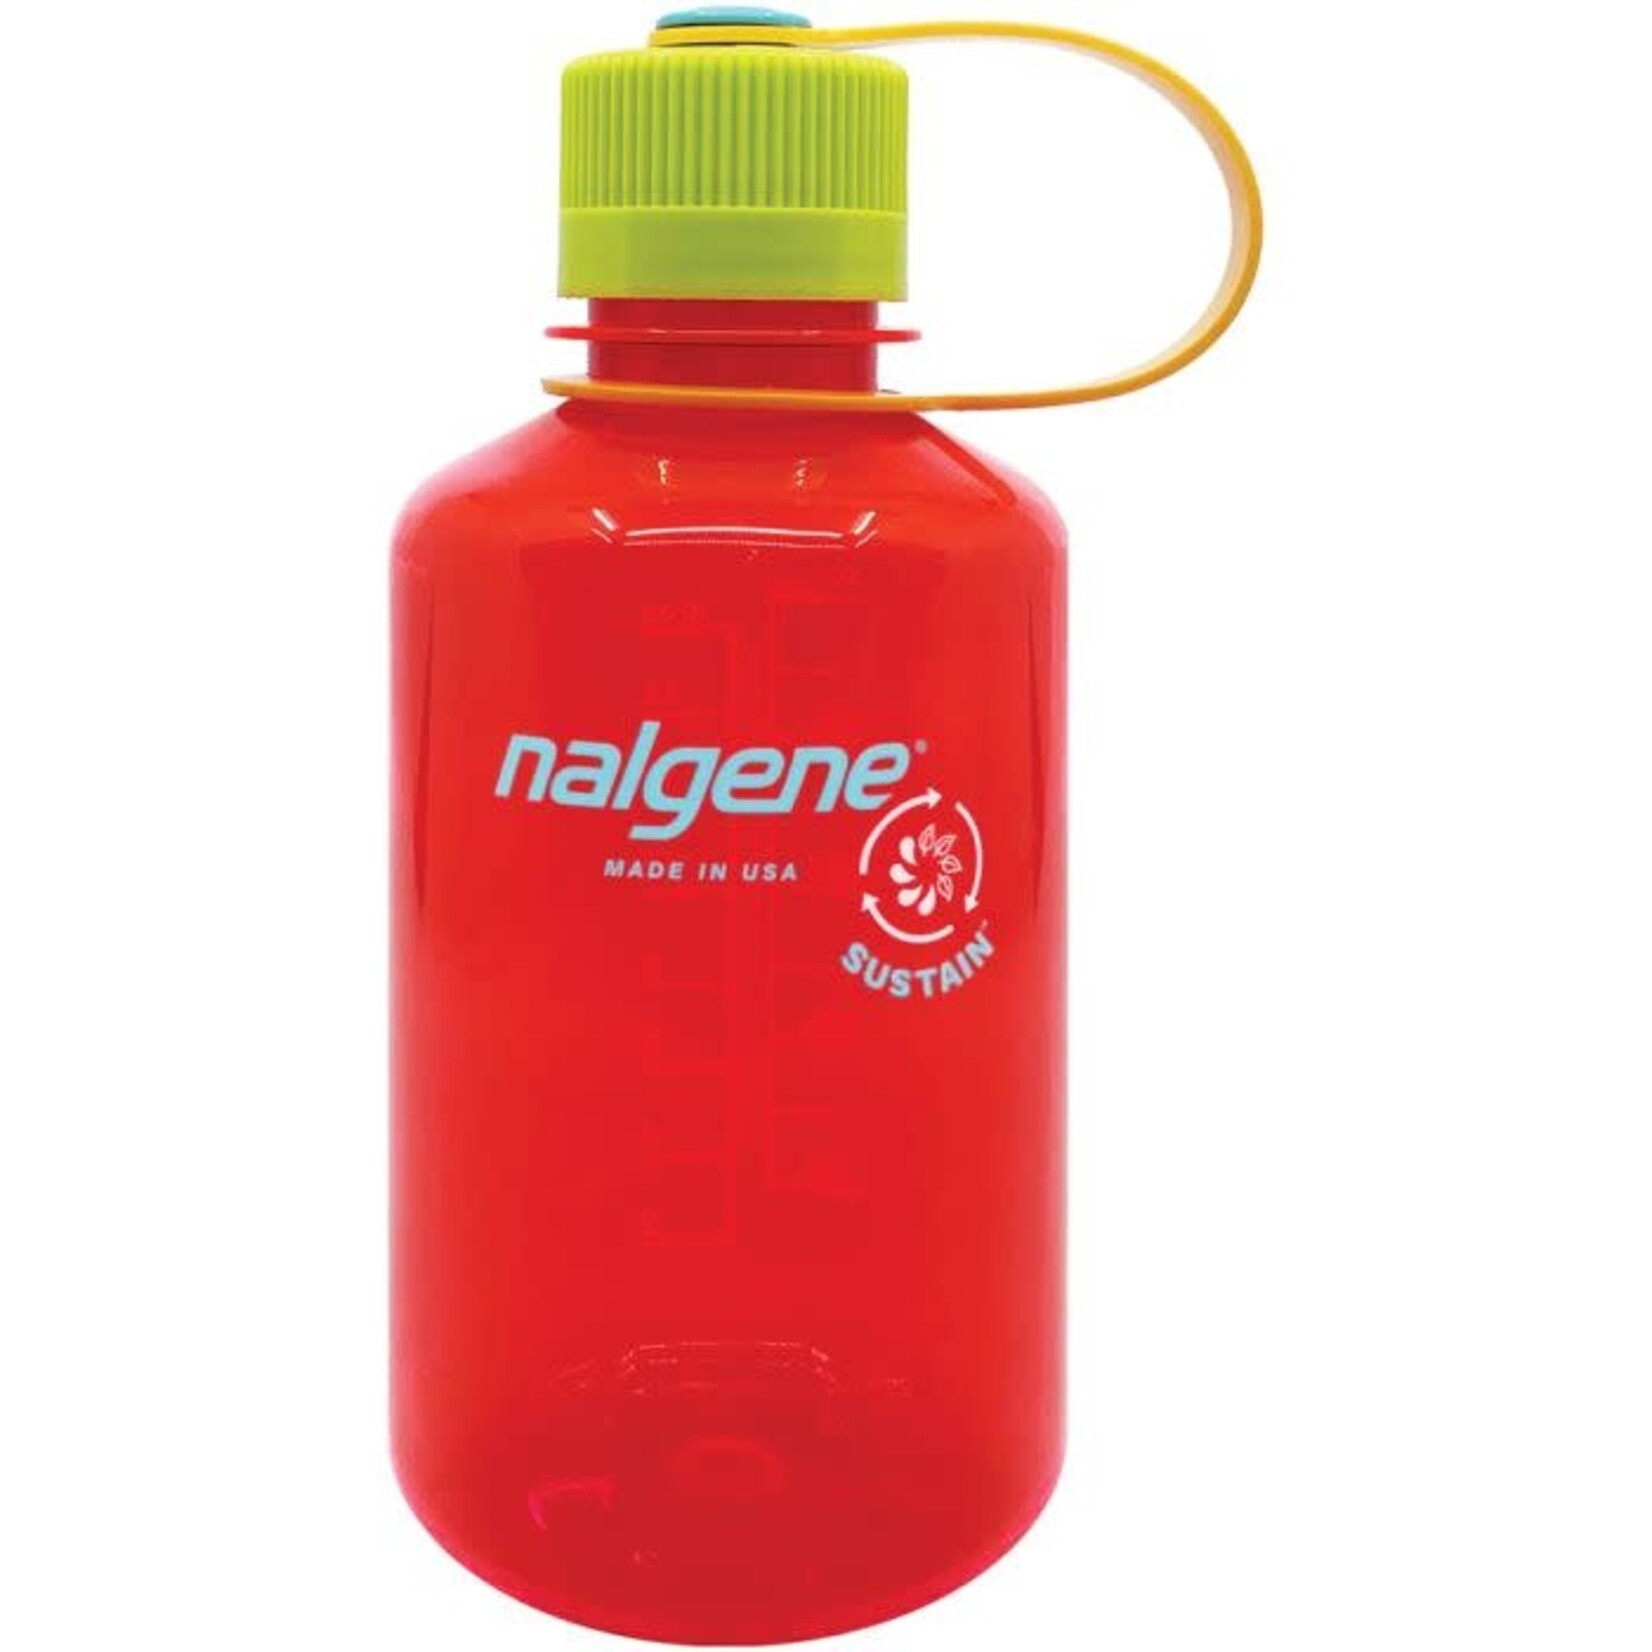 NALGENE NALGENE Narrow Mouth 16oz Sustain Water Bottle